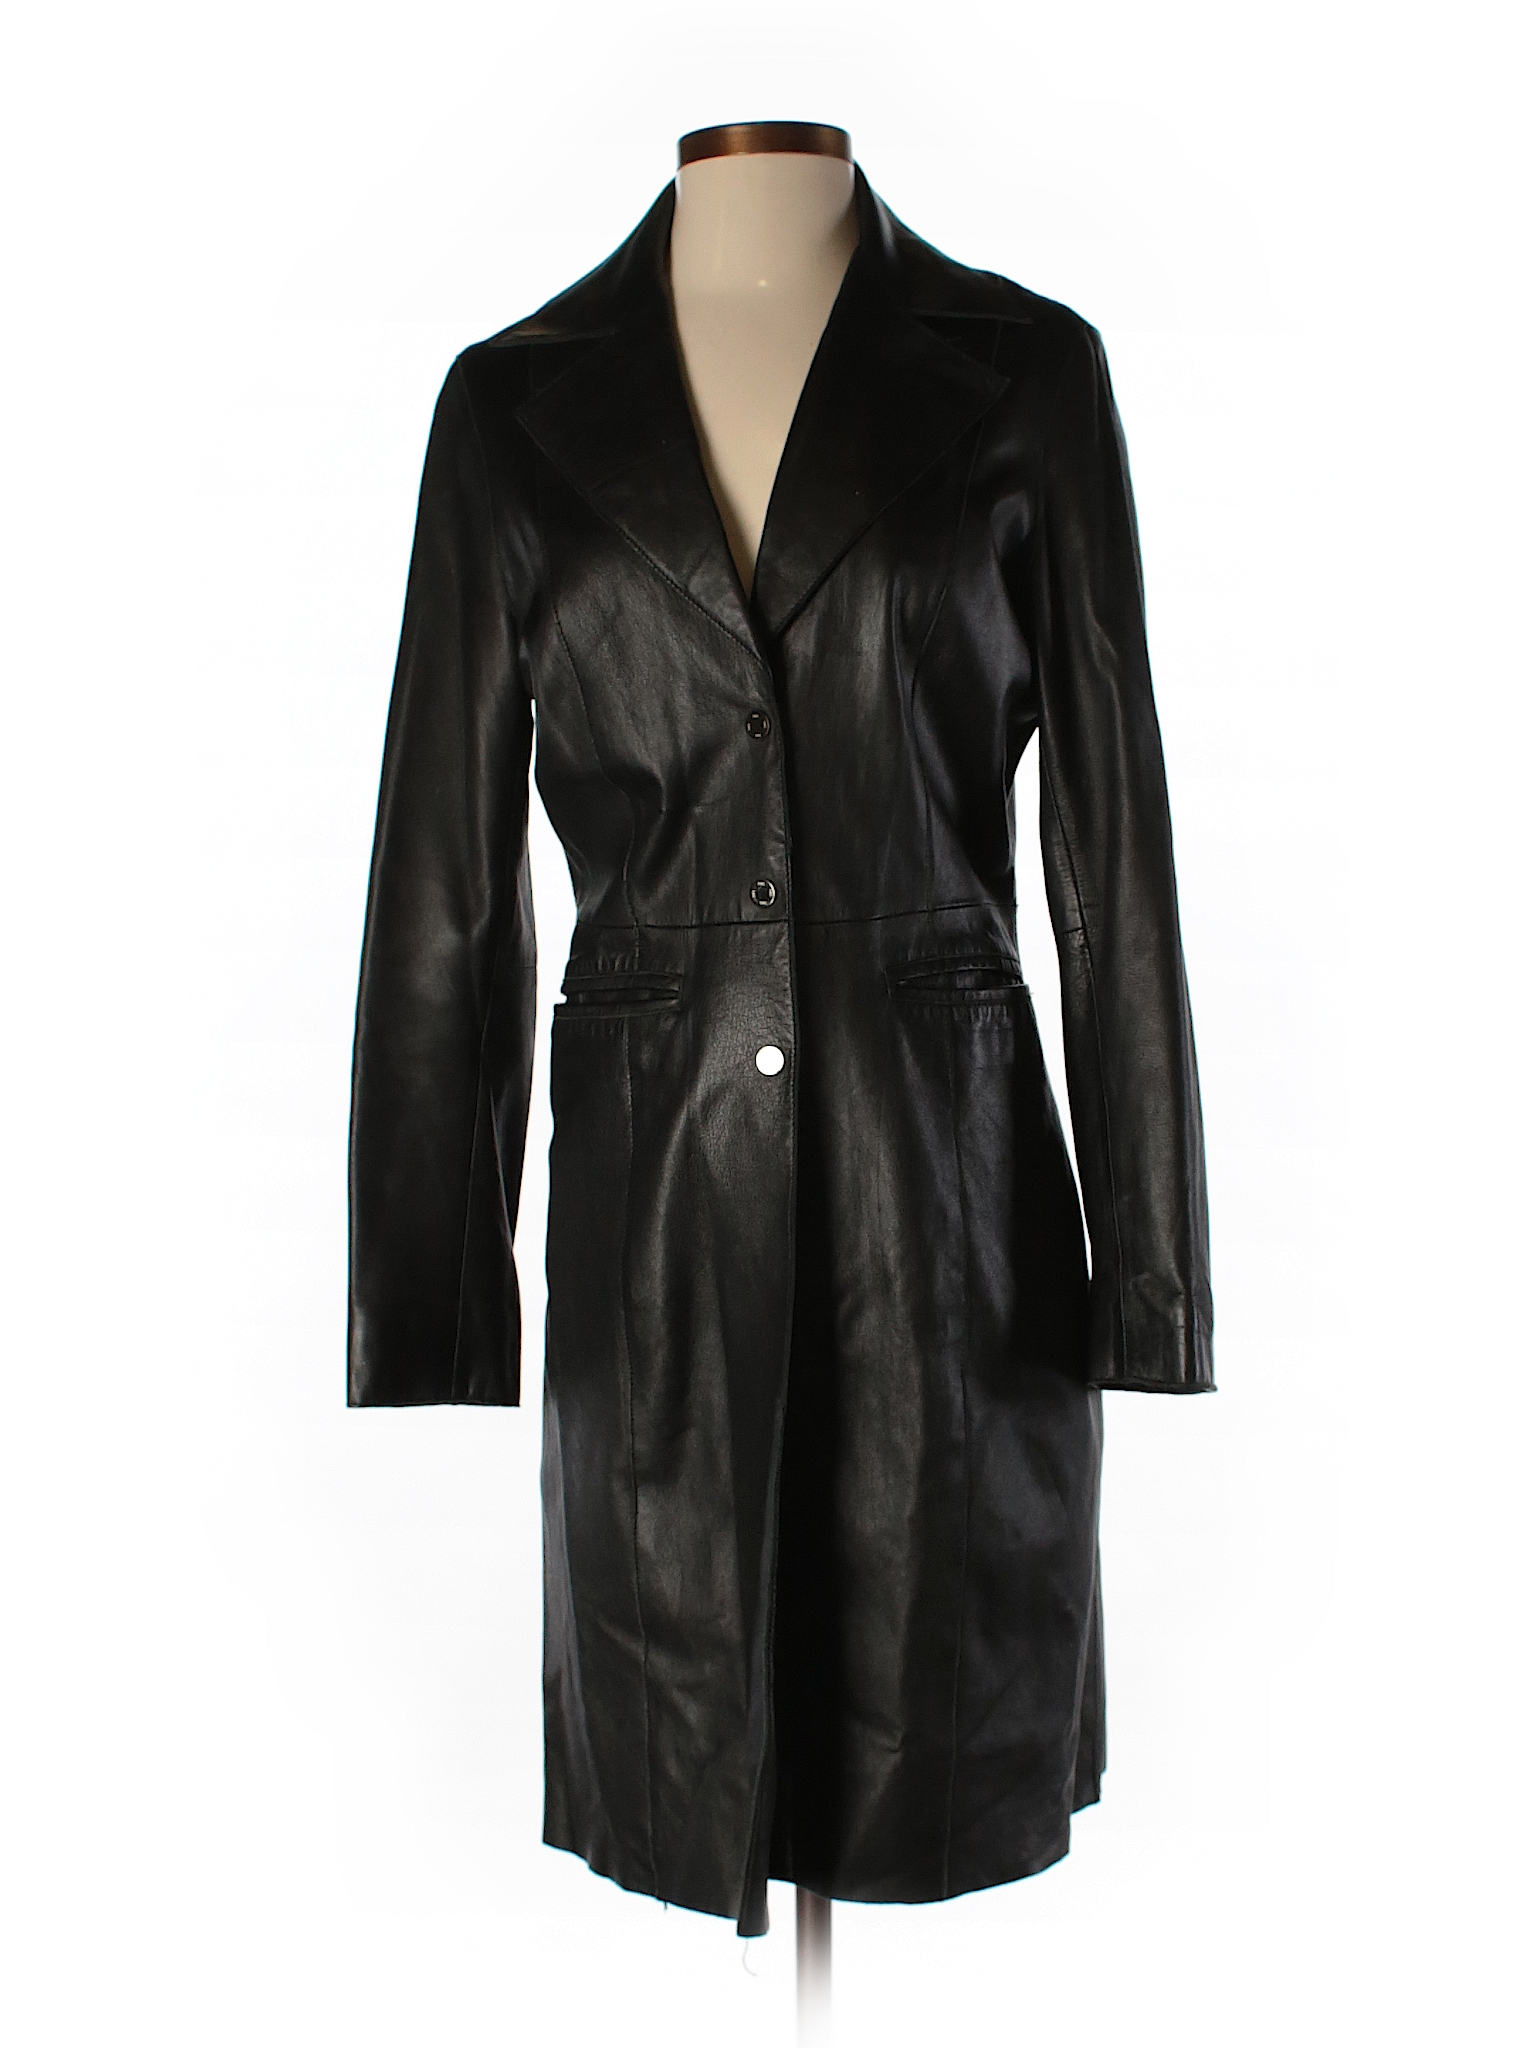 Bebe 100% Leather Solid Black Leather Jacket Size S - 79% off | thredUP